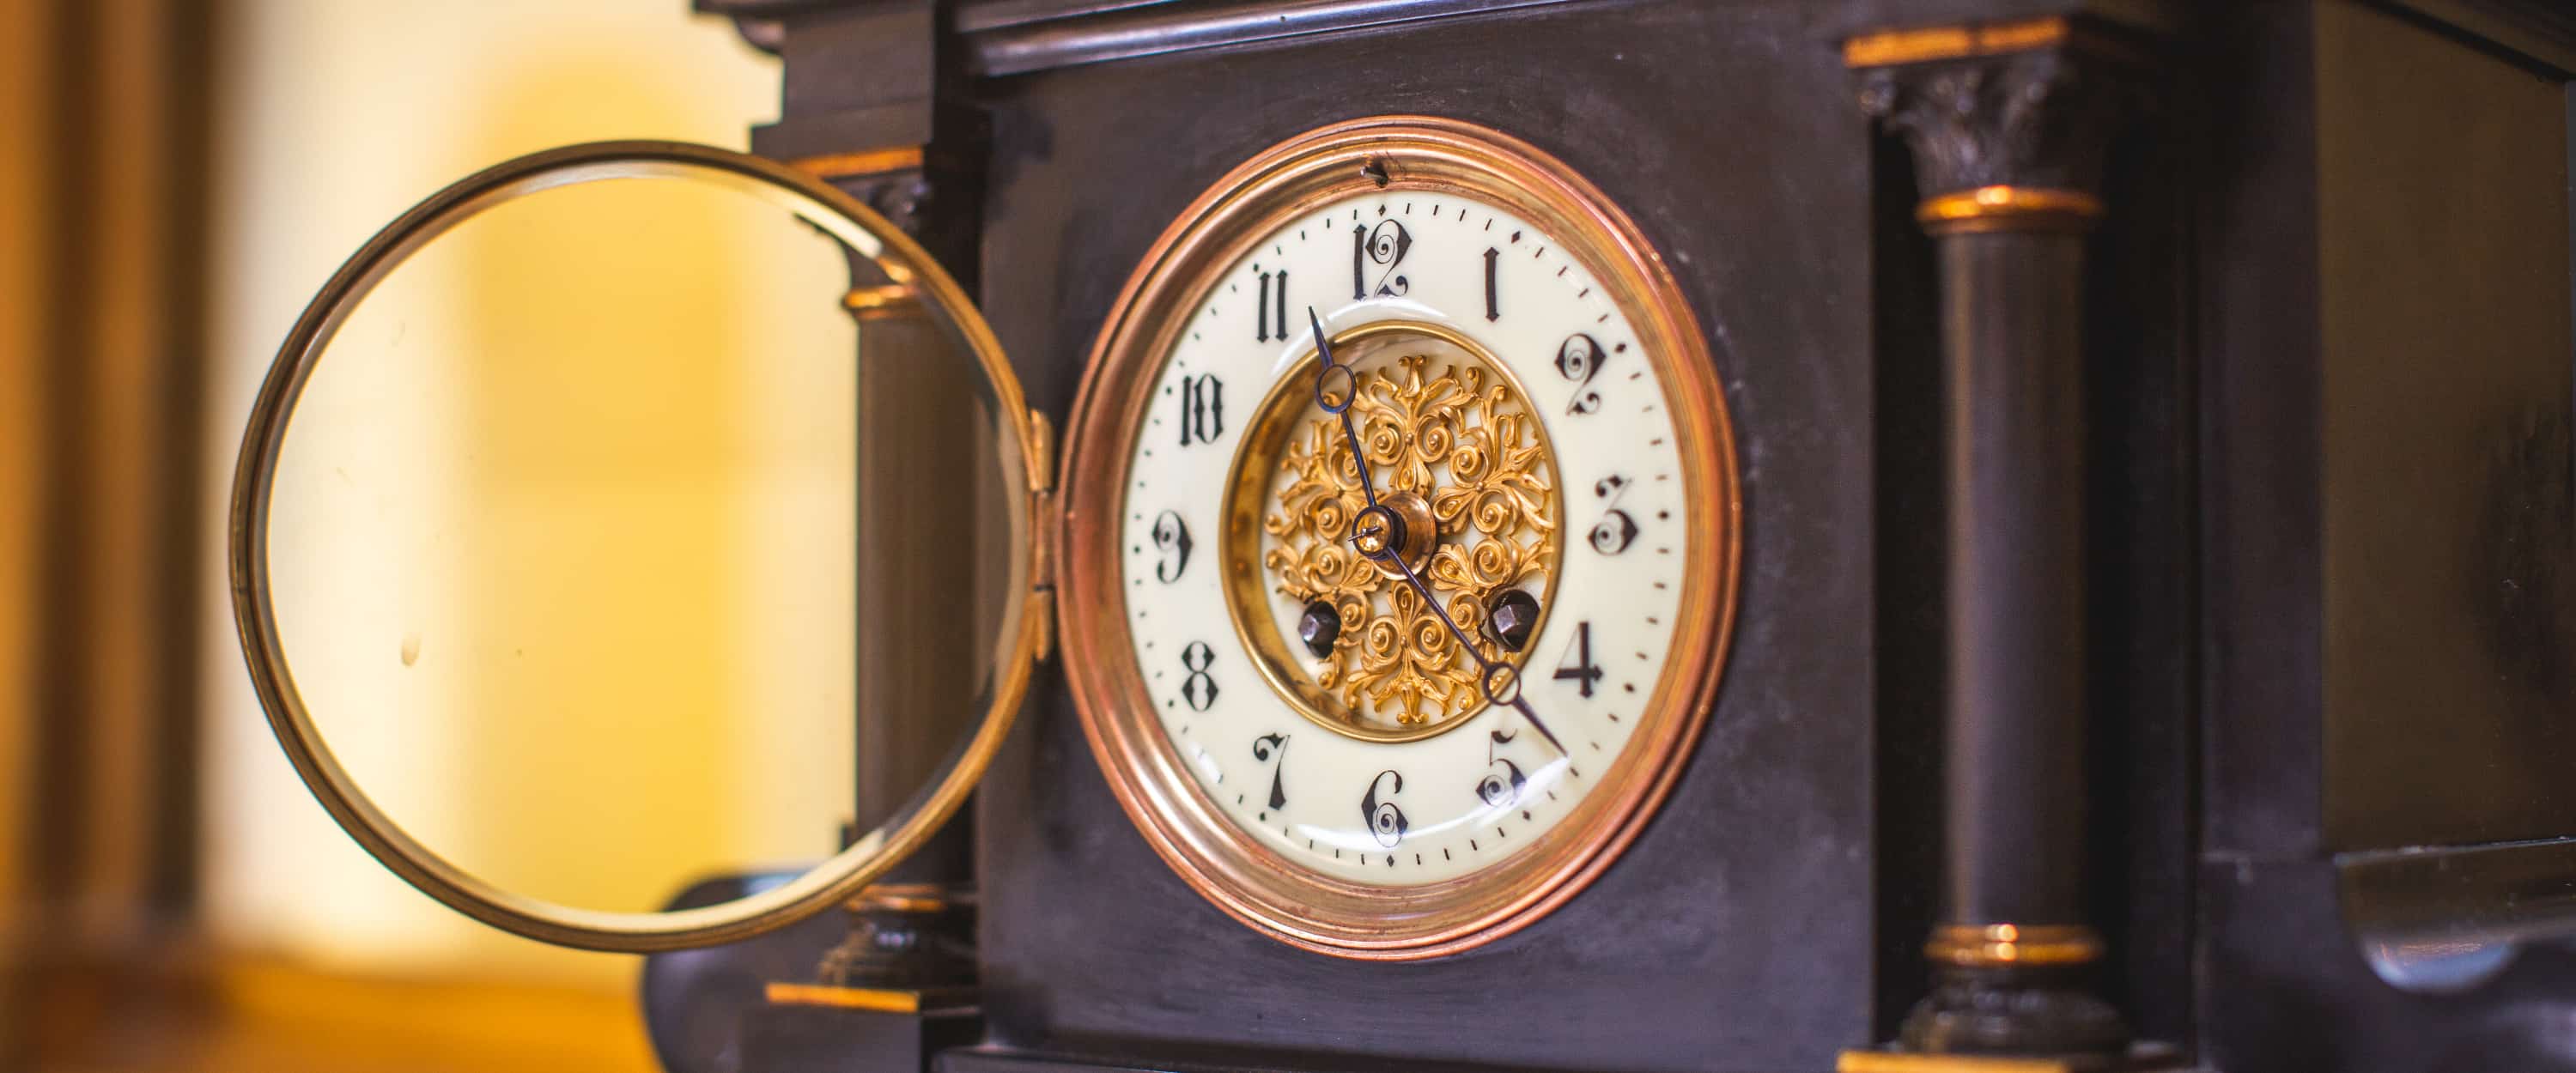 Vintage open-faced mantle clock with ornate details.